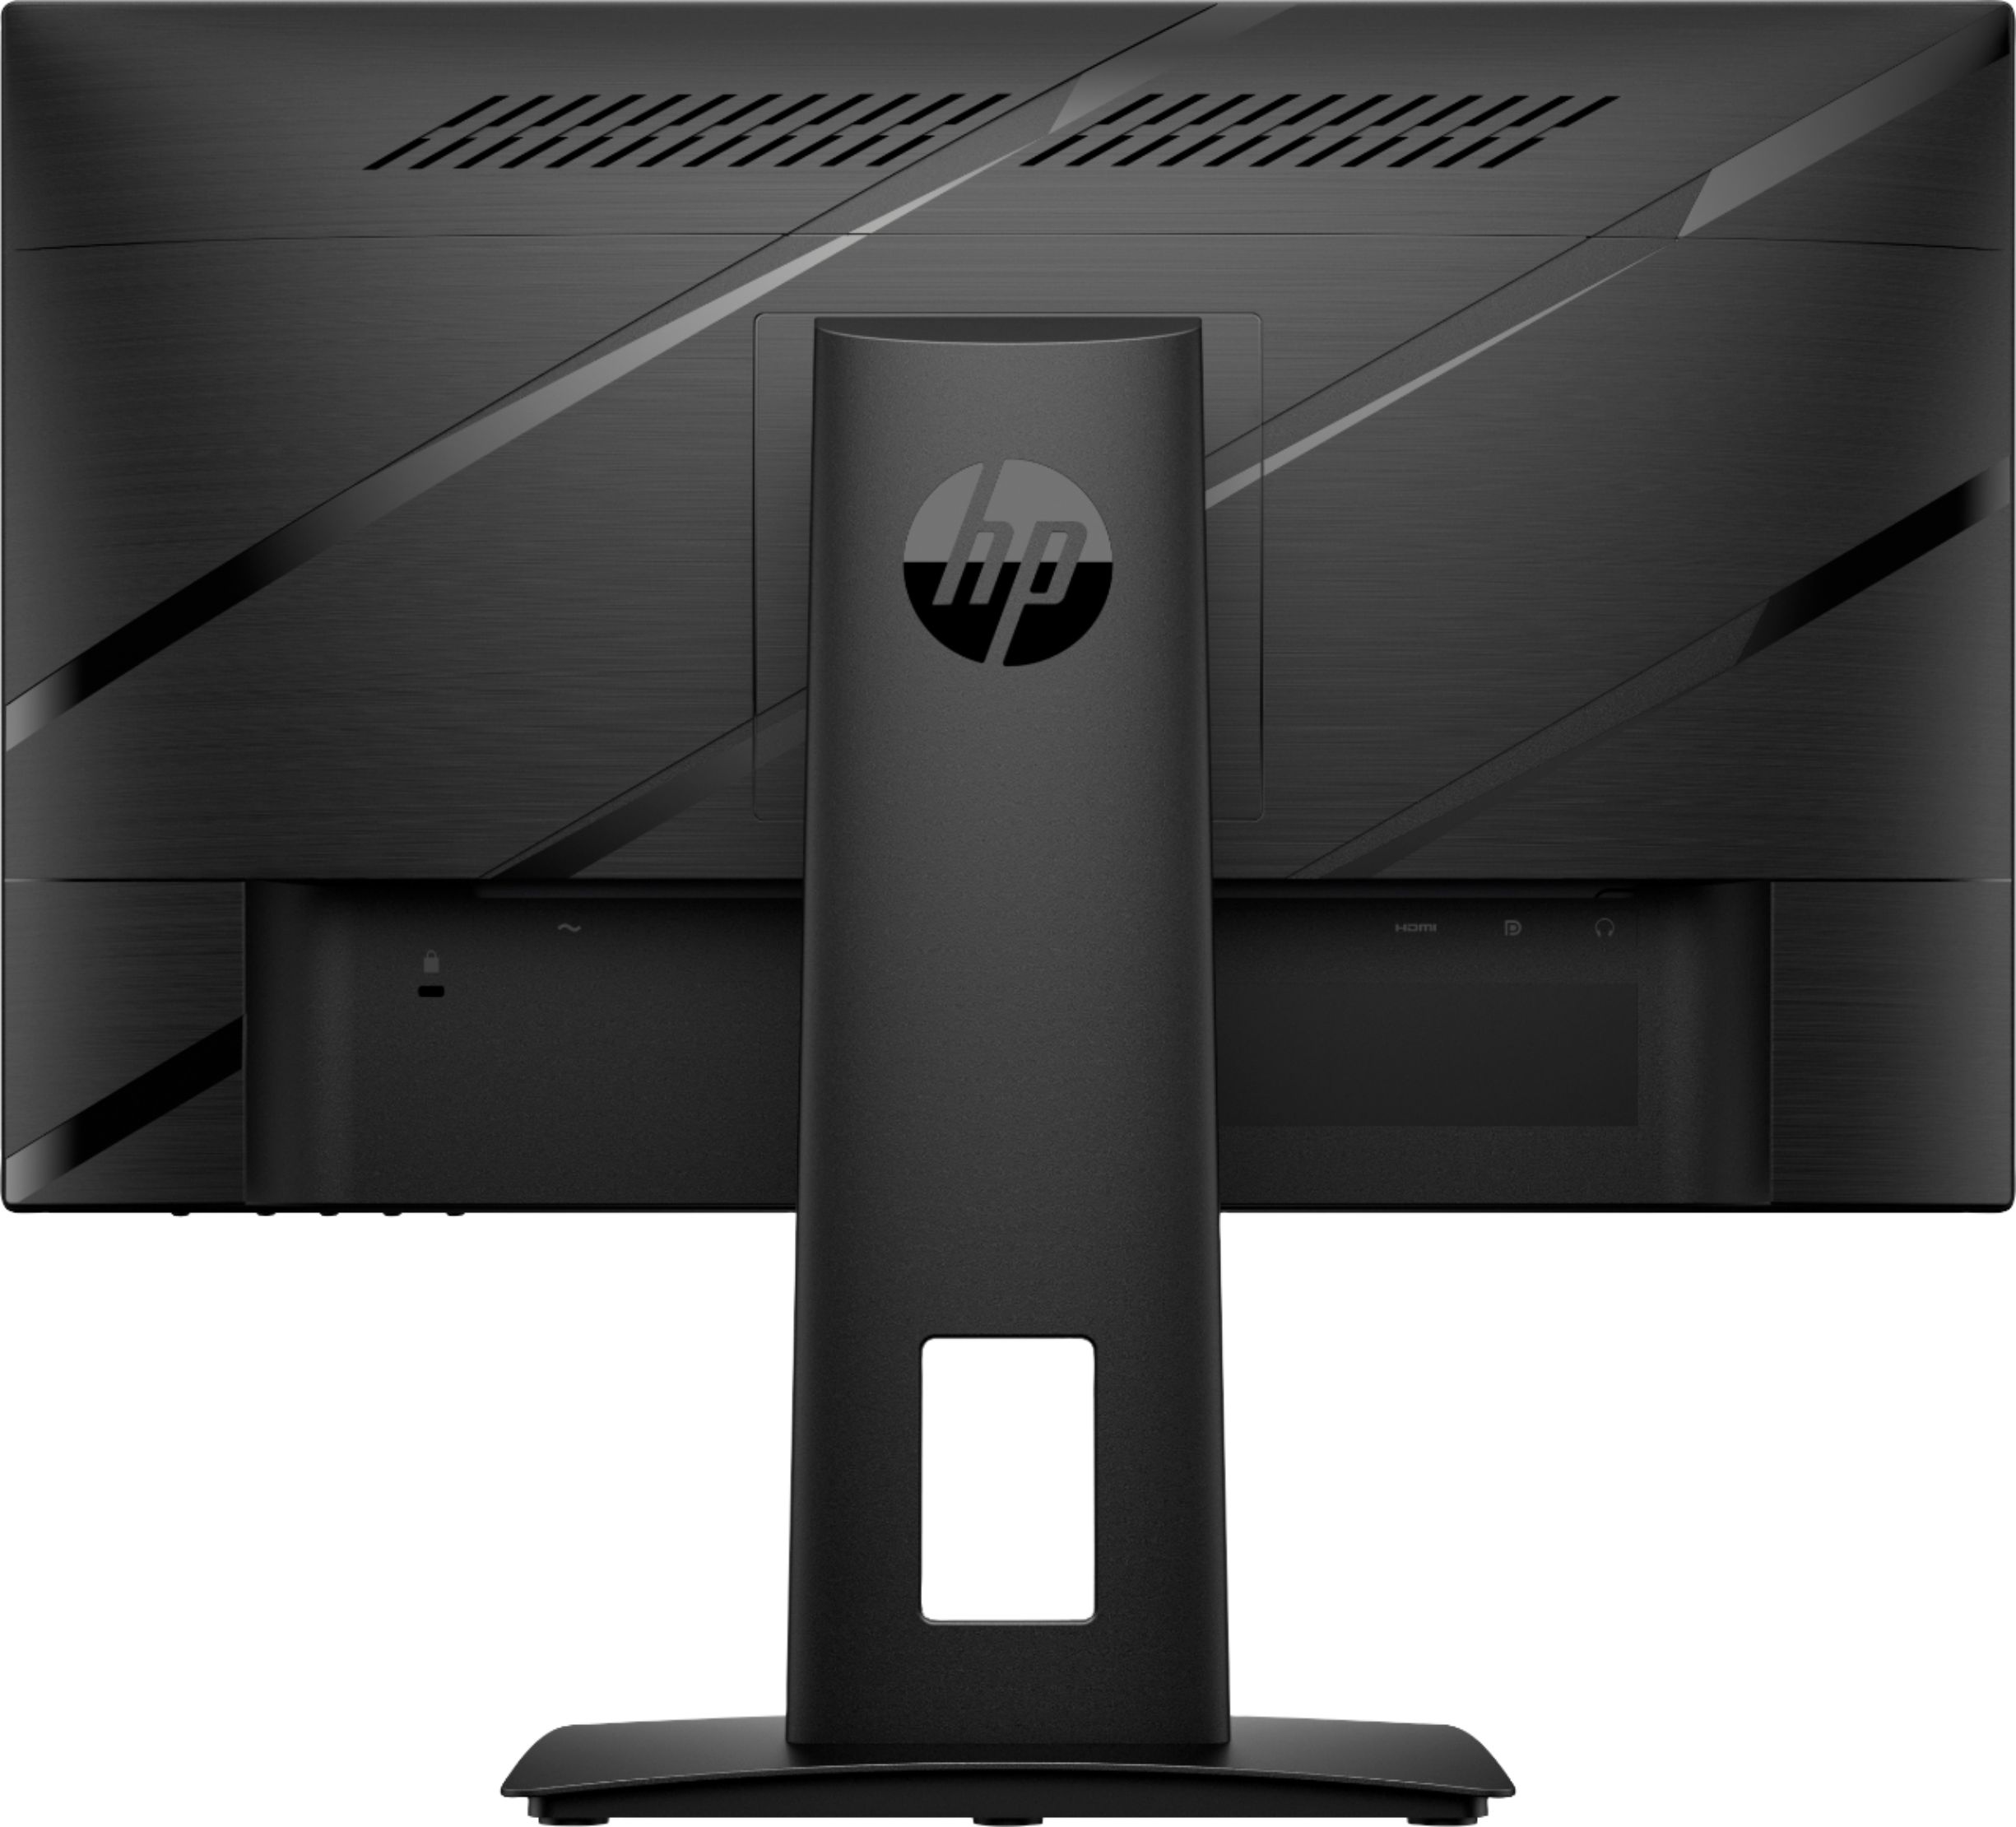 Back View: HP - LaserJet Enterprise M455dn Color Laser Printer - White